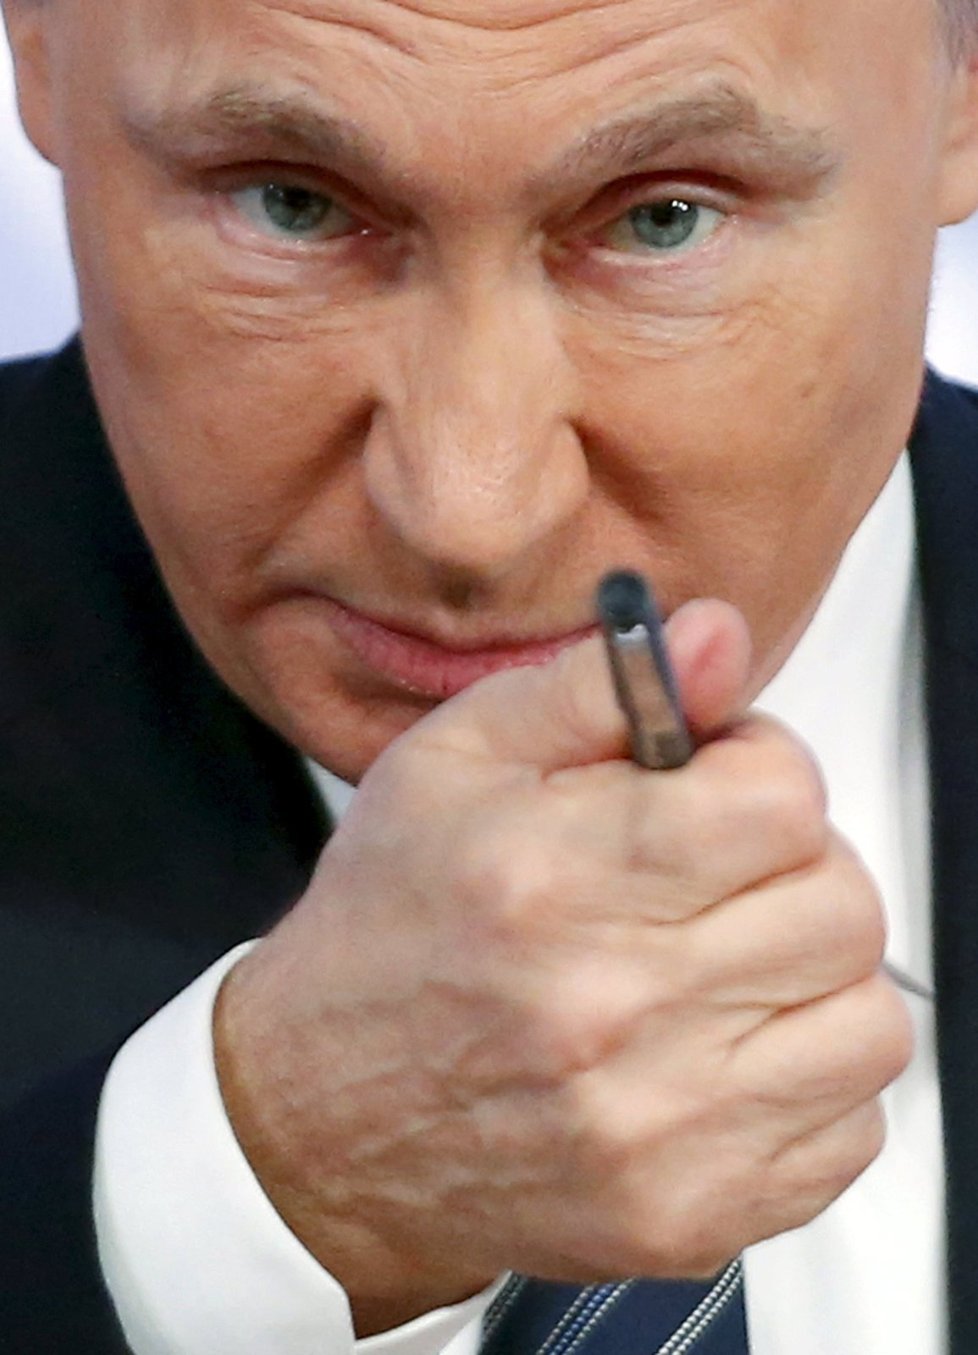 Ruský prezident Vladimir Putin